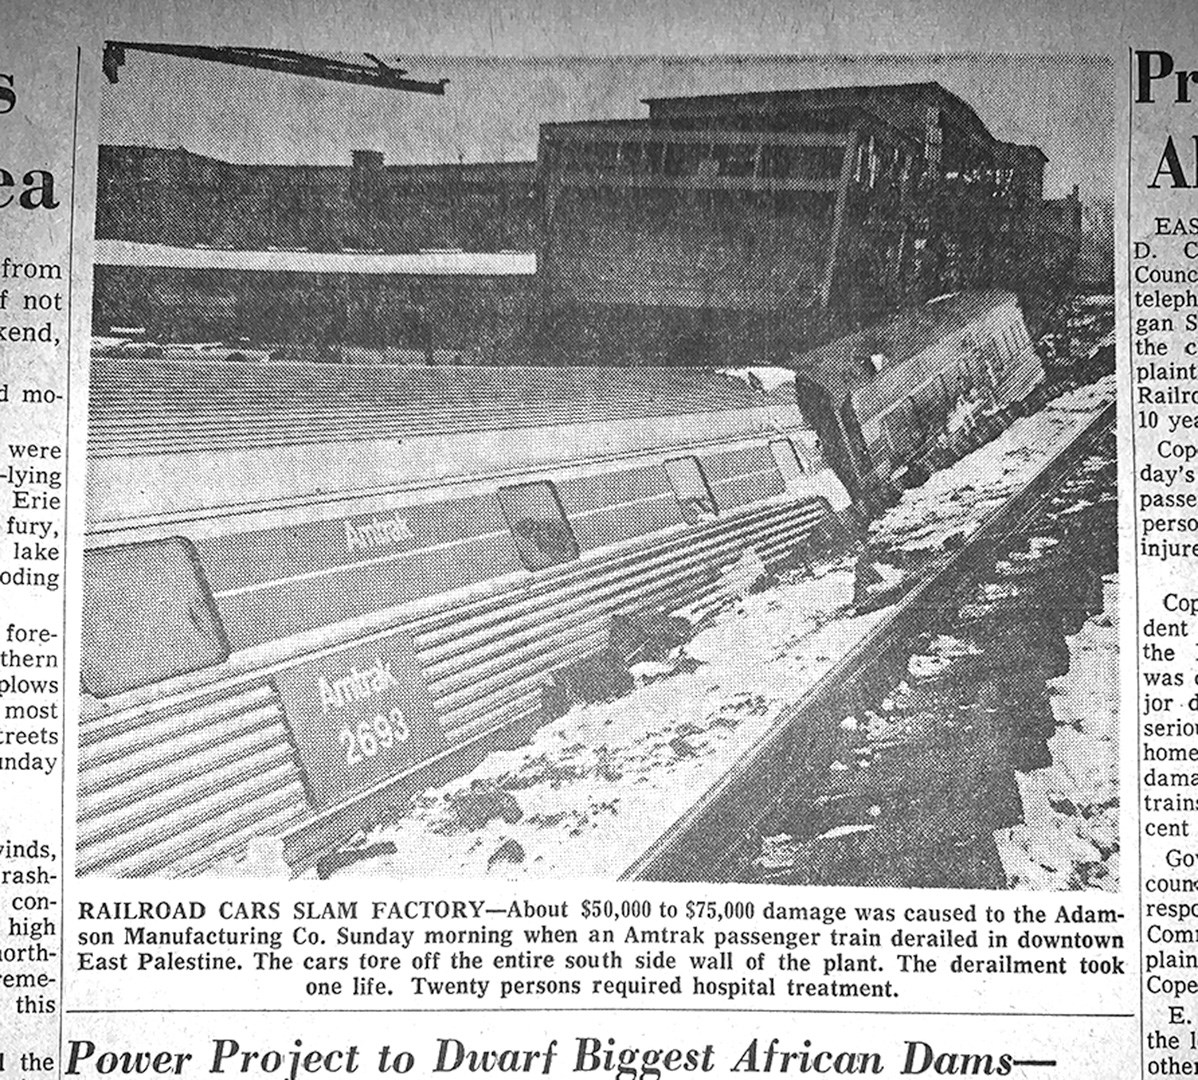 1973 Amtrak derailment that killed one in East Palestine